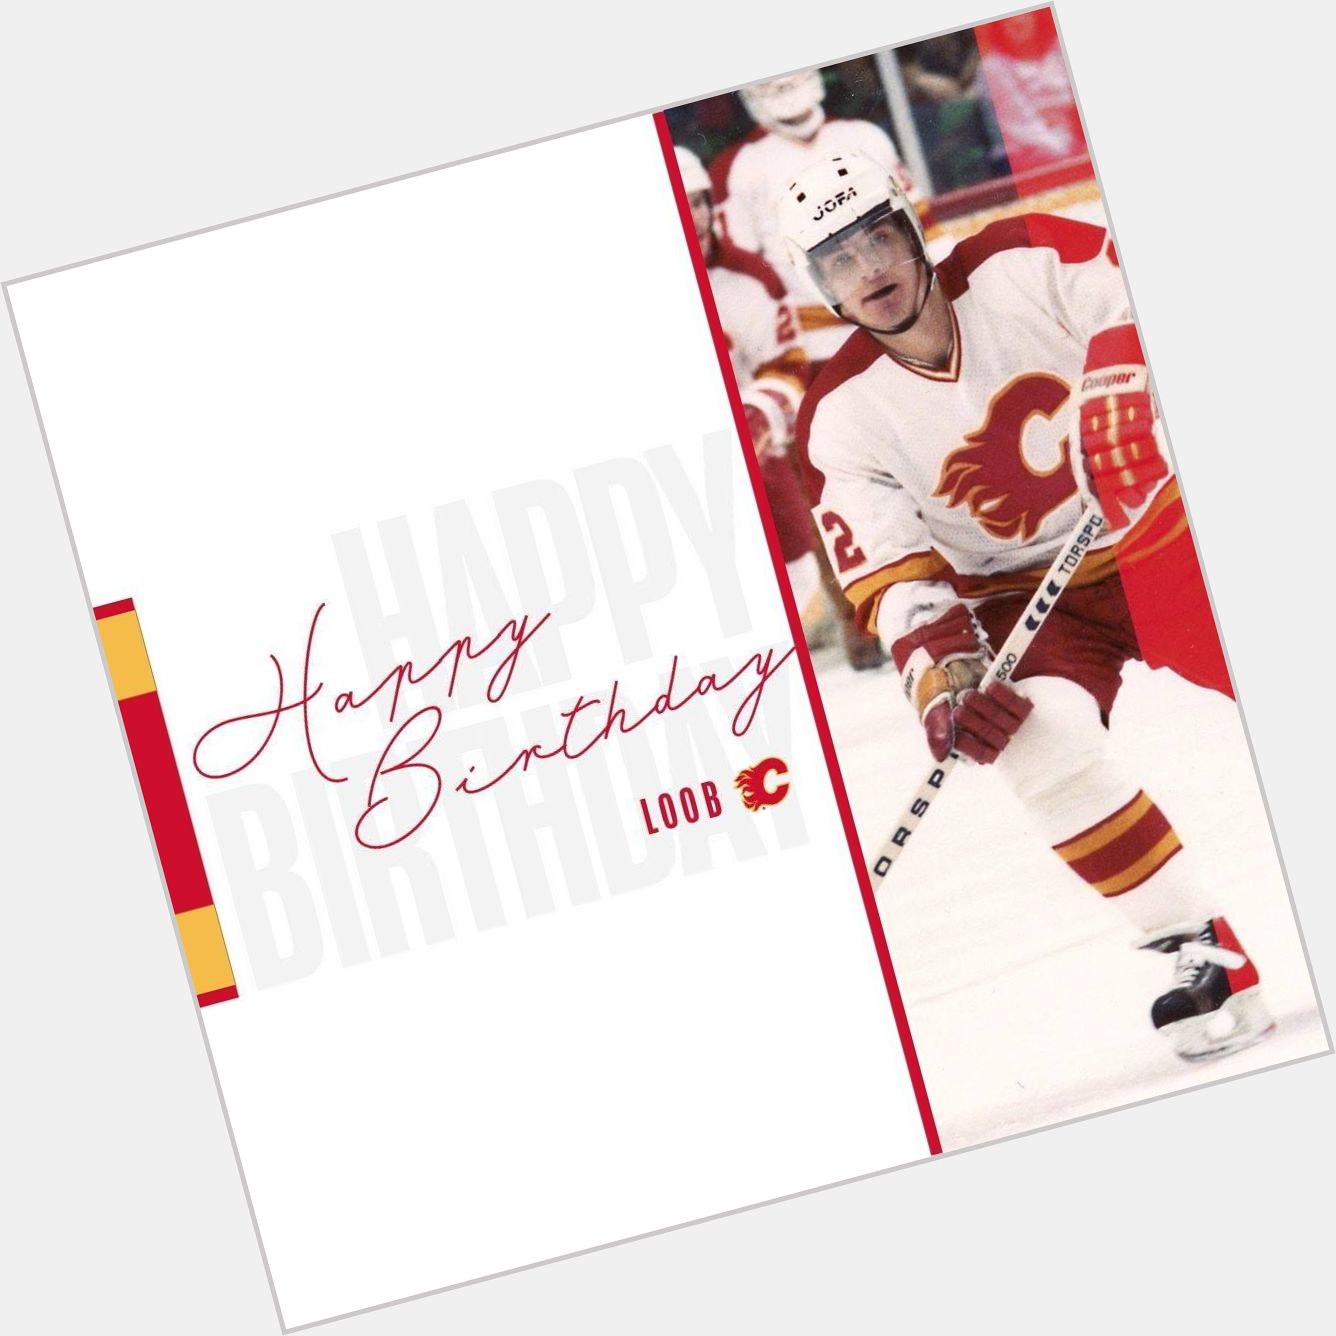 Calgary Flames: Happy birthday to Håkan Loob!... 
 

 
. 